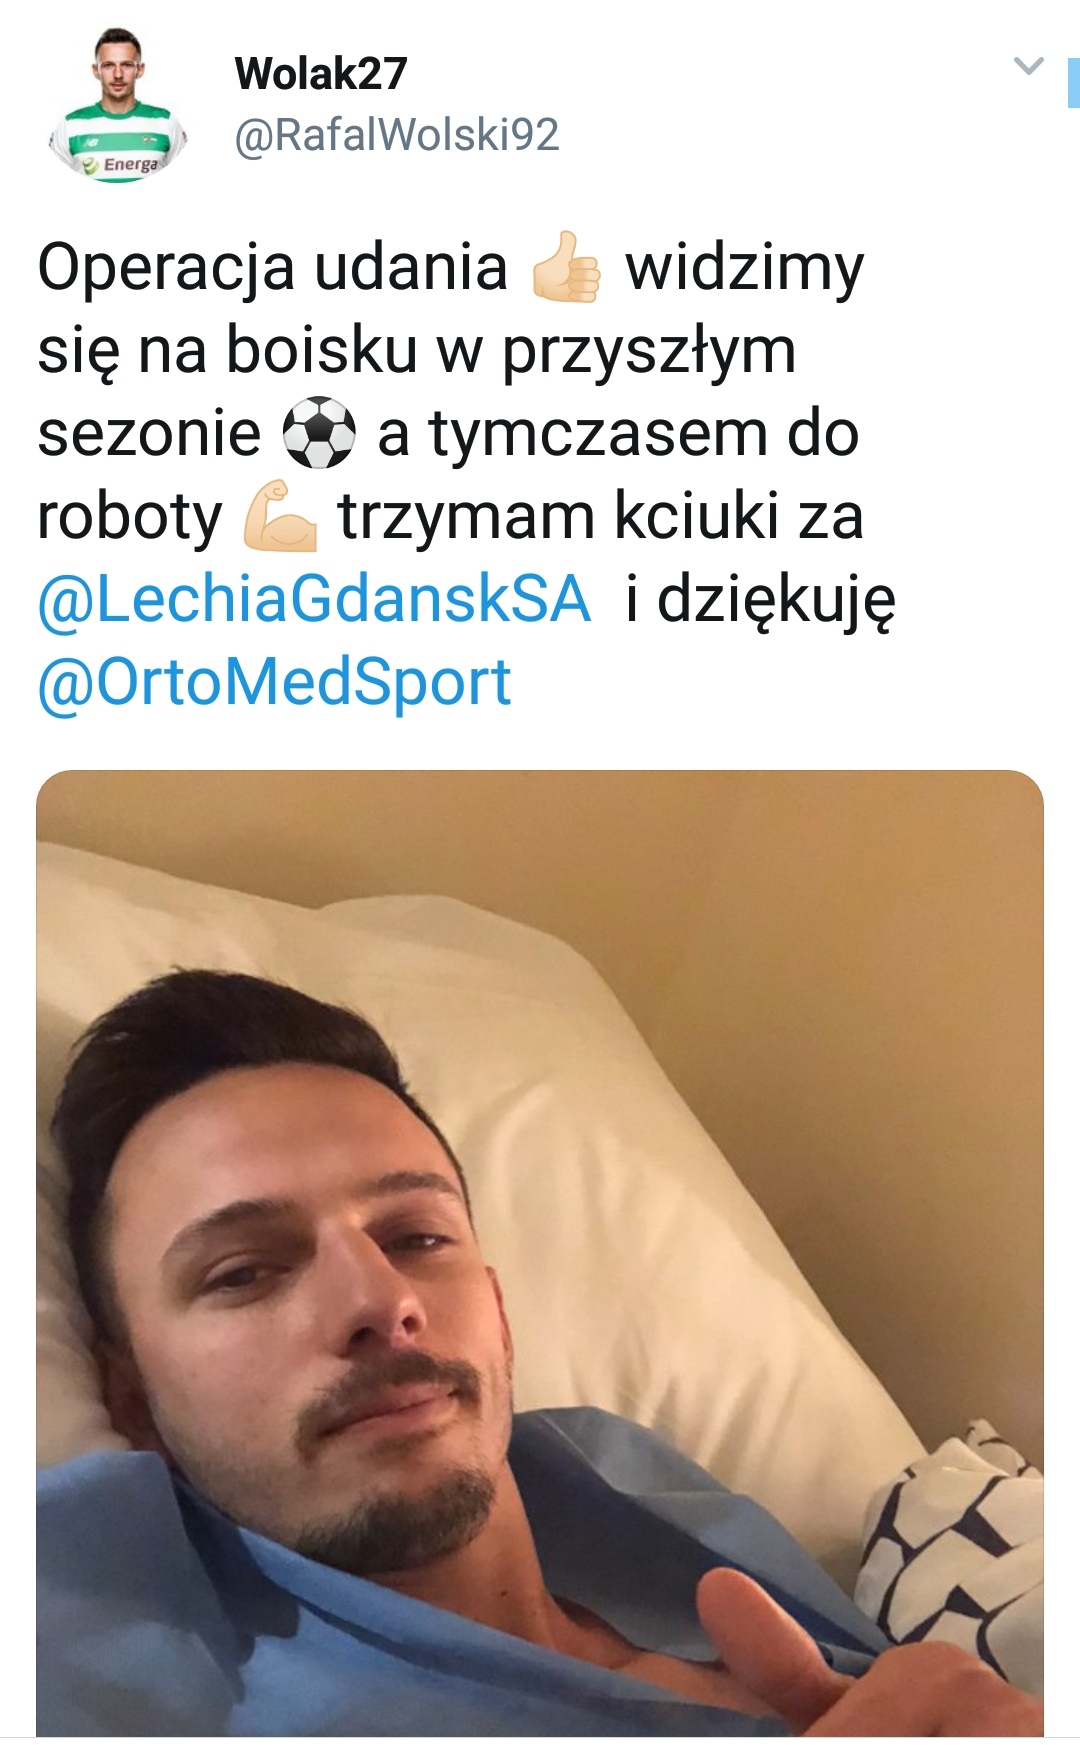 2019.01.25 Rafał Wolski po operacji Twitter